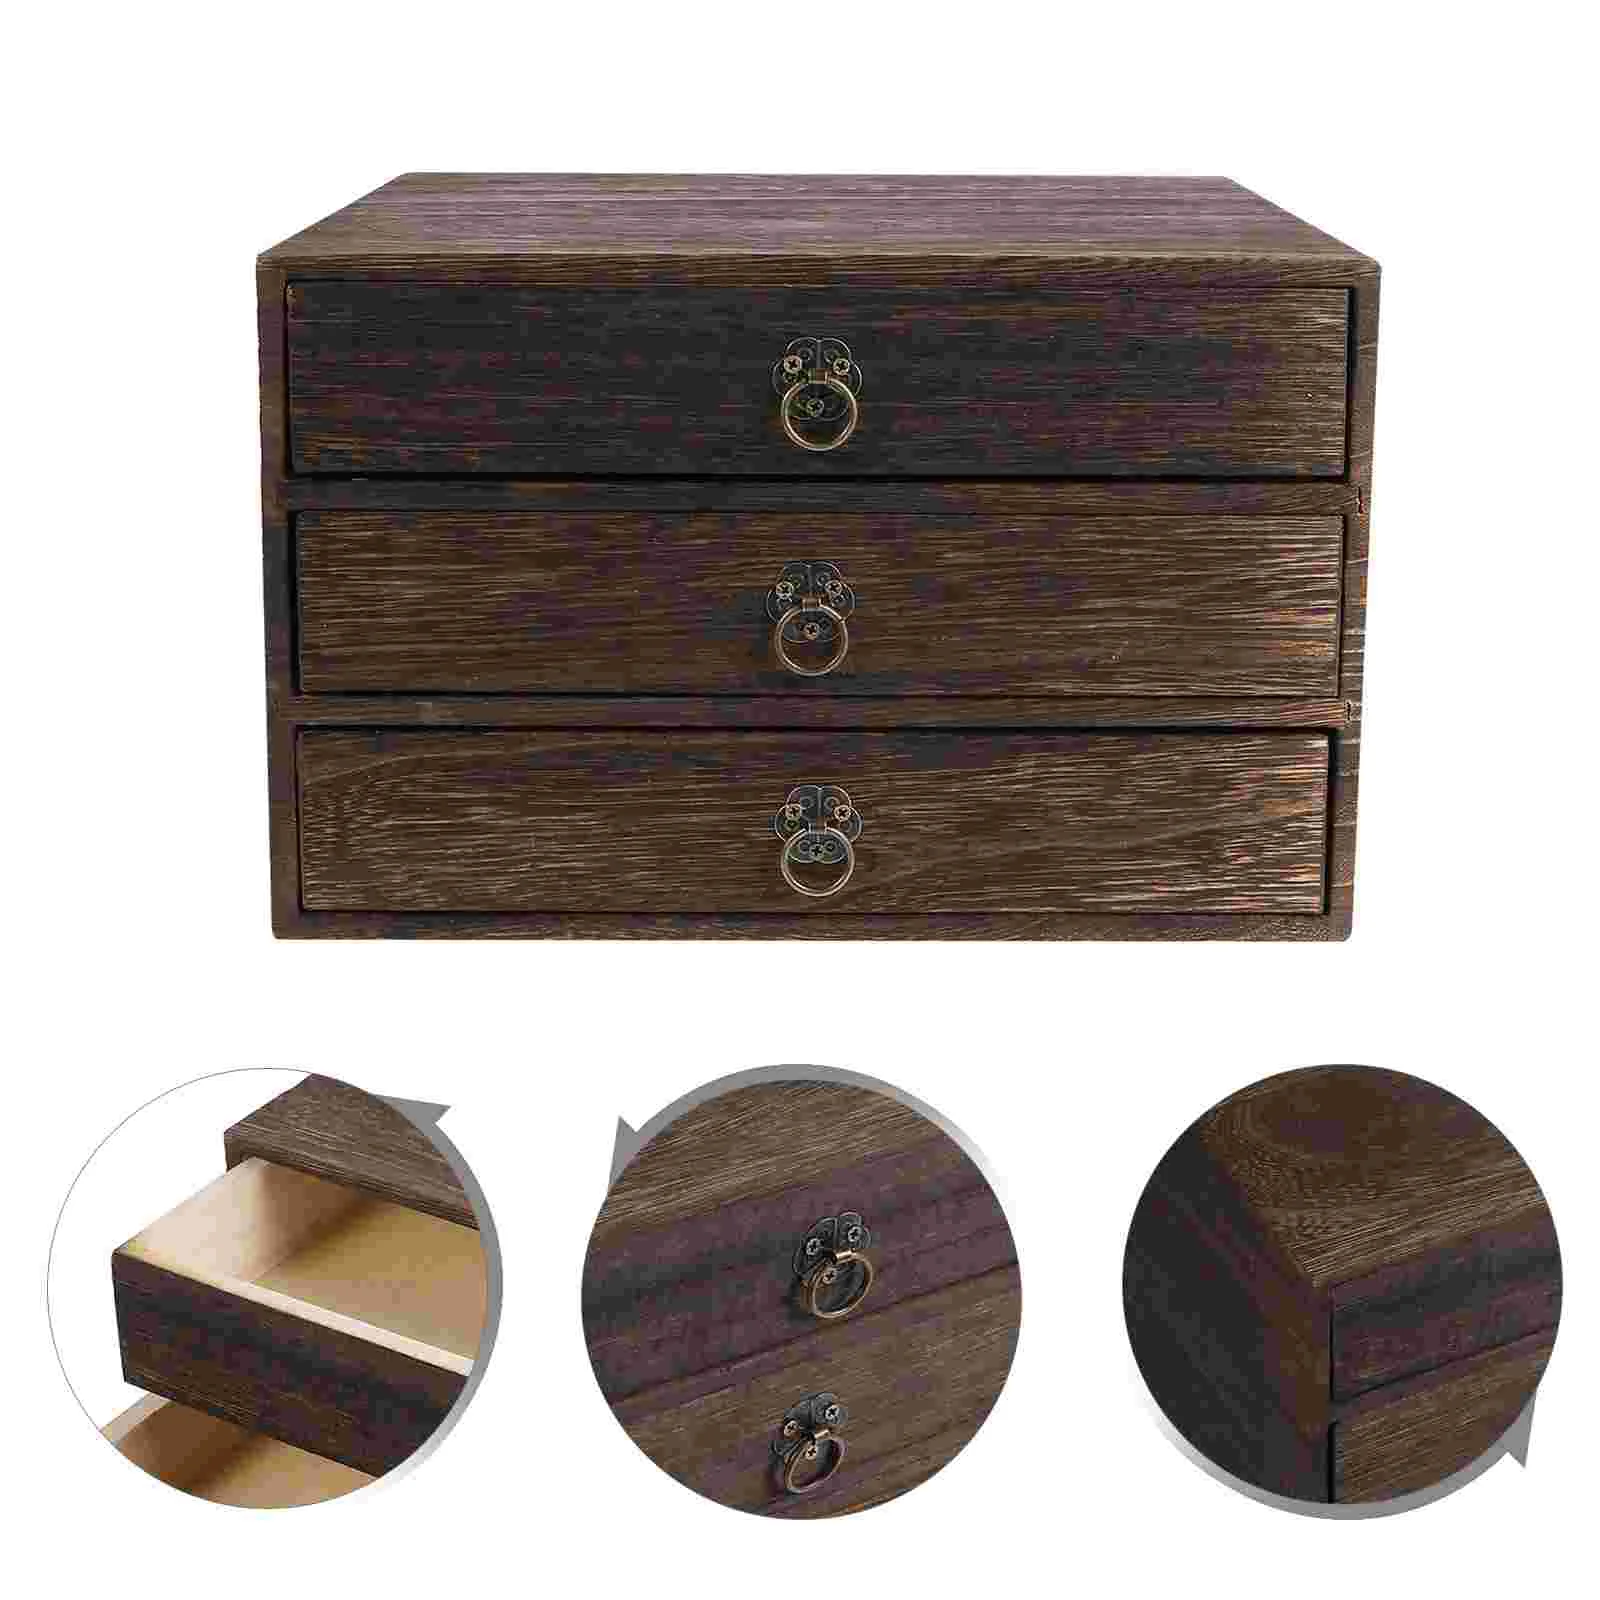 

Vintage Wood Jewelry Organizer Box Organizing Box Multi-Layer Drawer Type Jewelry Storage Case Dustproof Document Box With